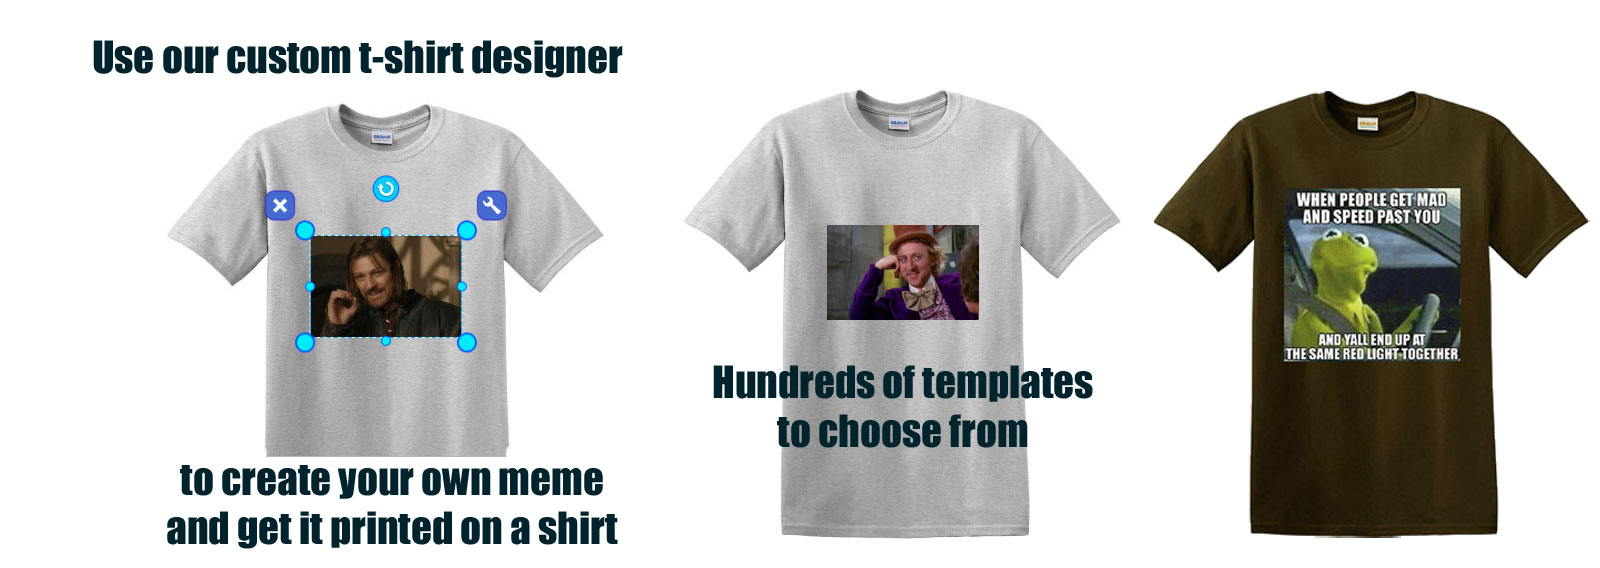 Make it Meme - Merchandise